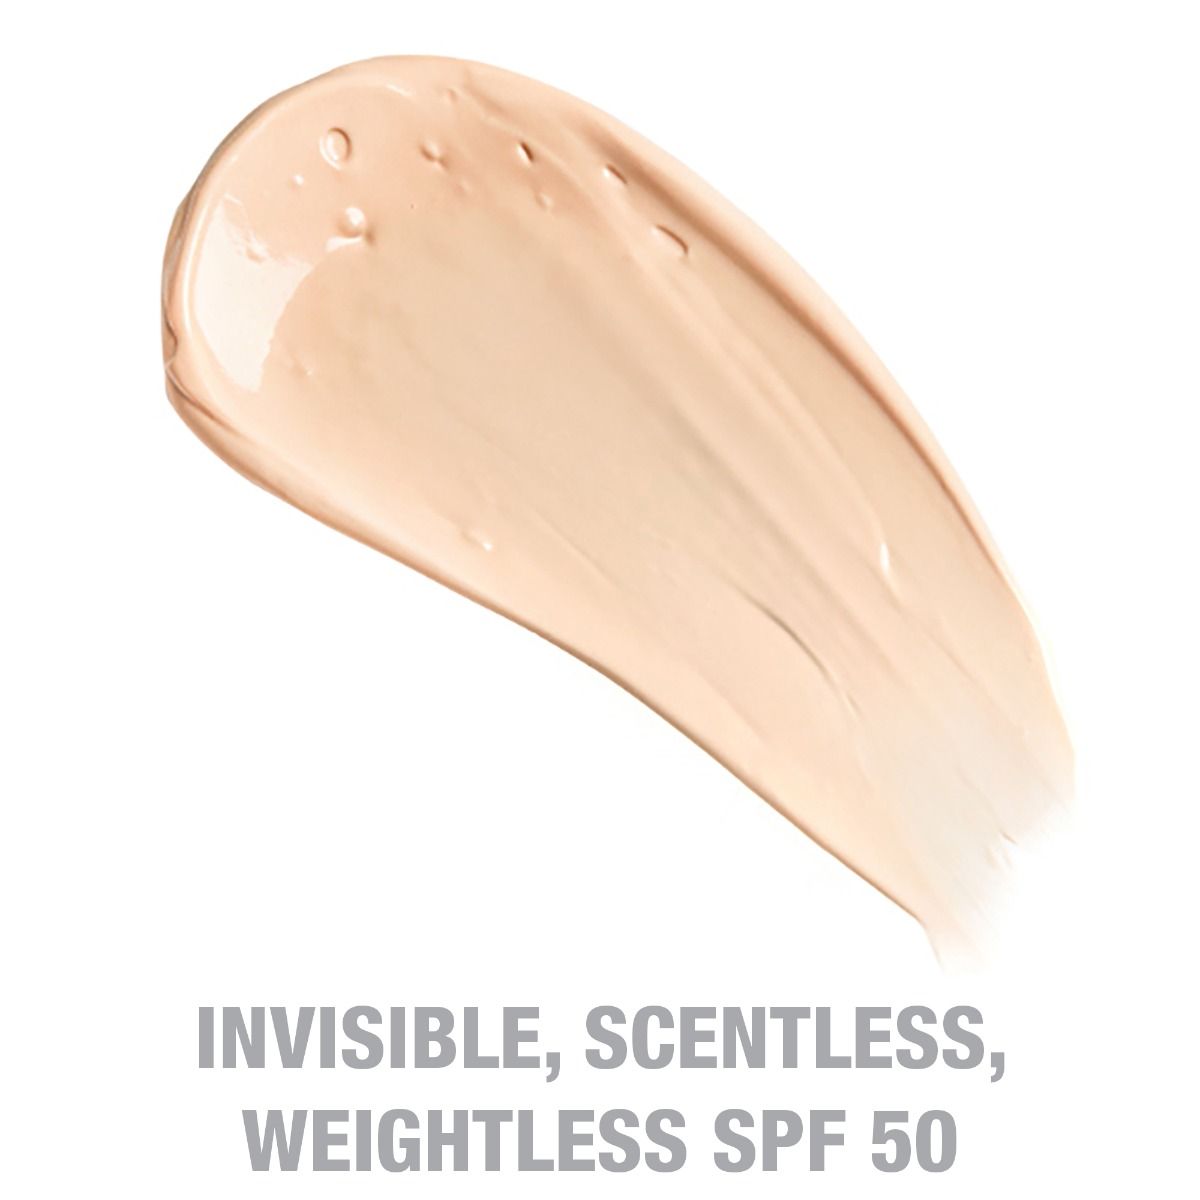 SPF 50 Sunscreen Invisible UV Flawless Primer